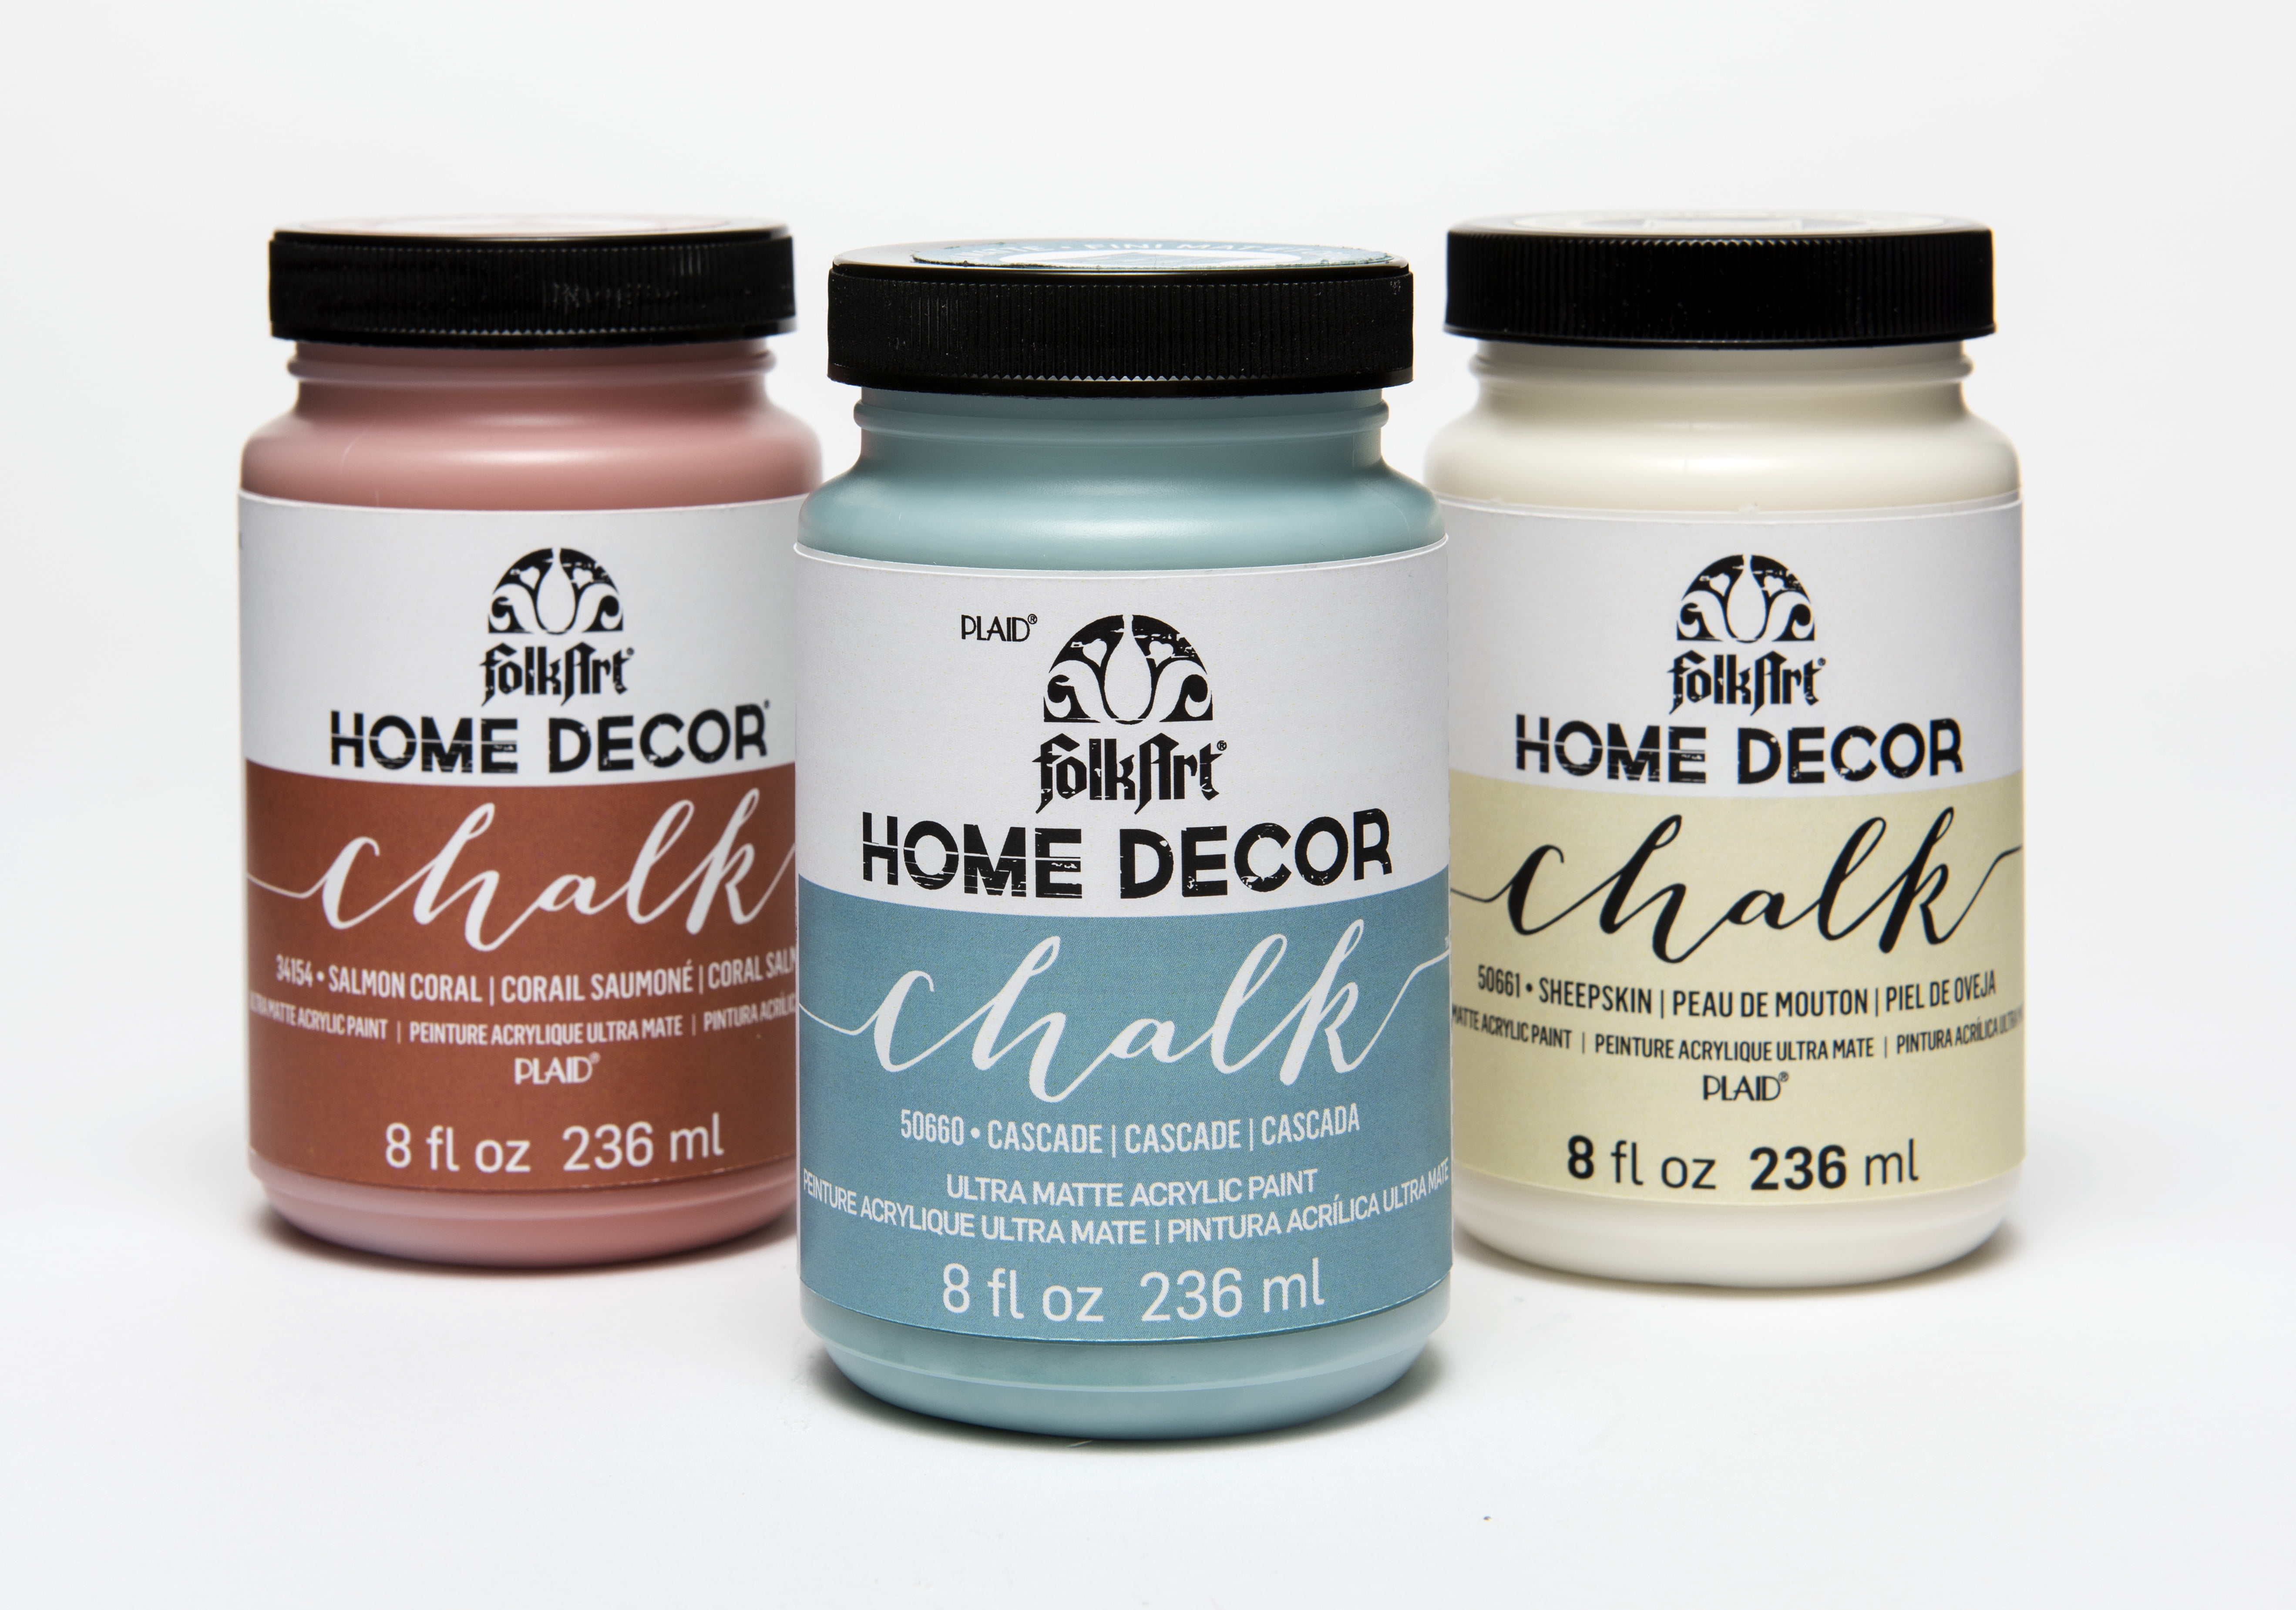 FolkArt Home dcor Chalk - Paint Set 2 Ounce PROMOFAHDC